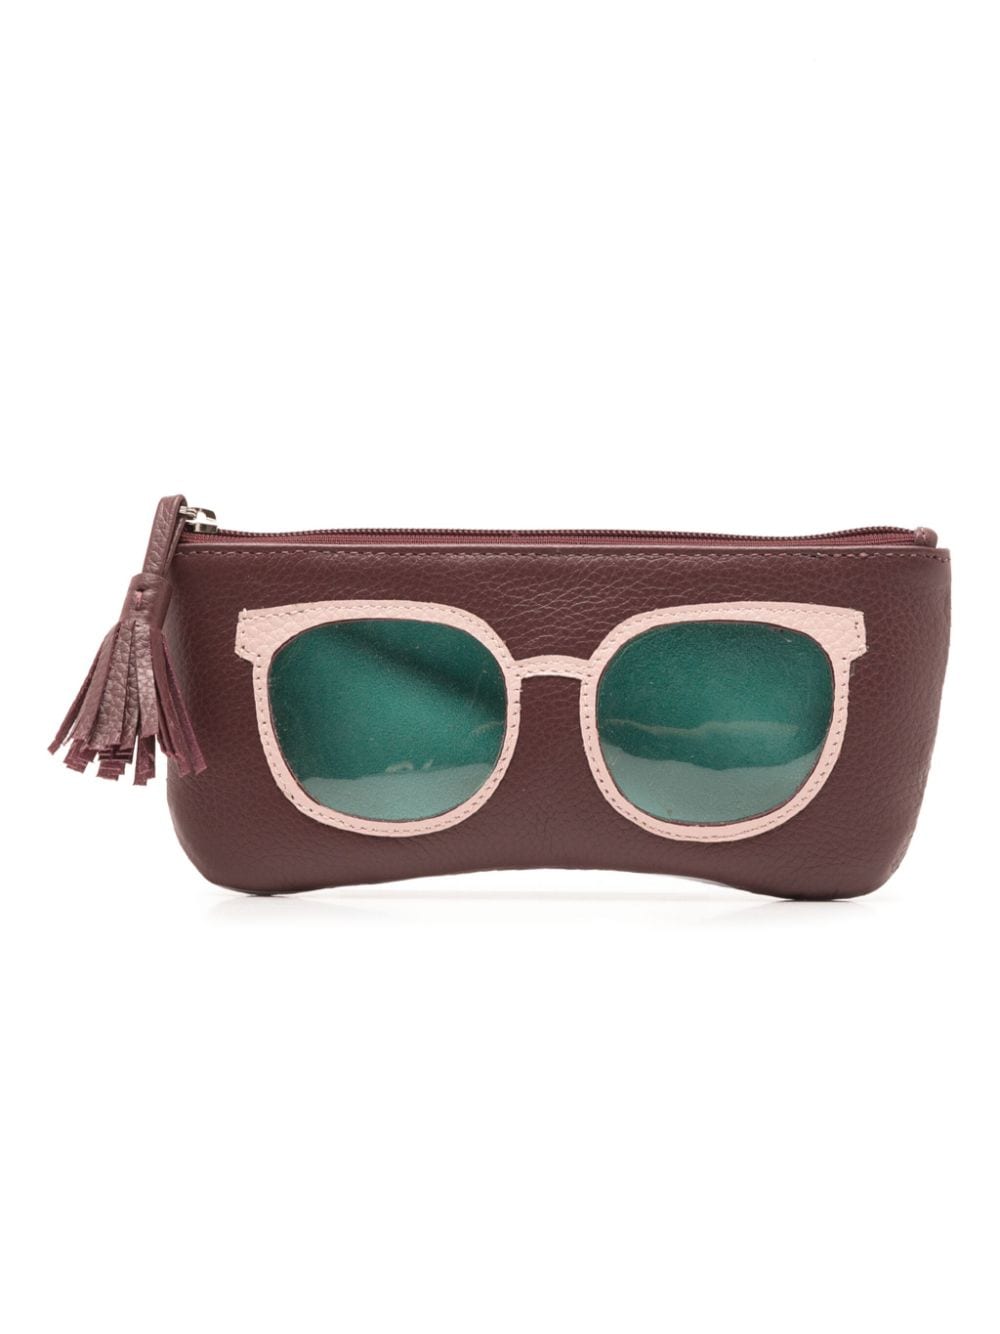 Sarah Chofakian appliquéd leather sunglasses case - Brown von Sarah Chofakian